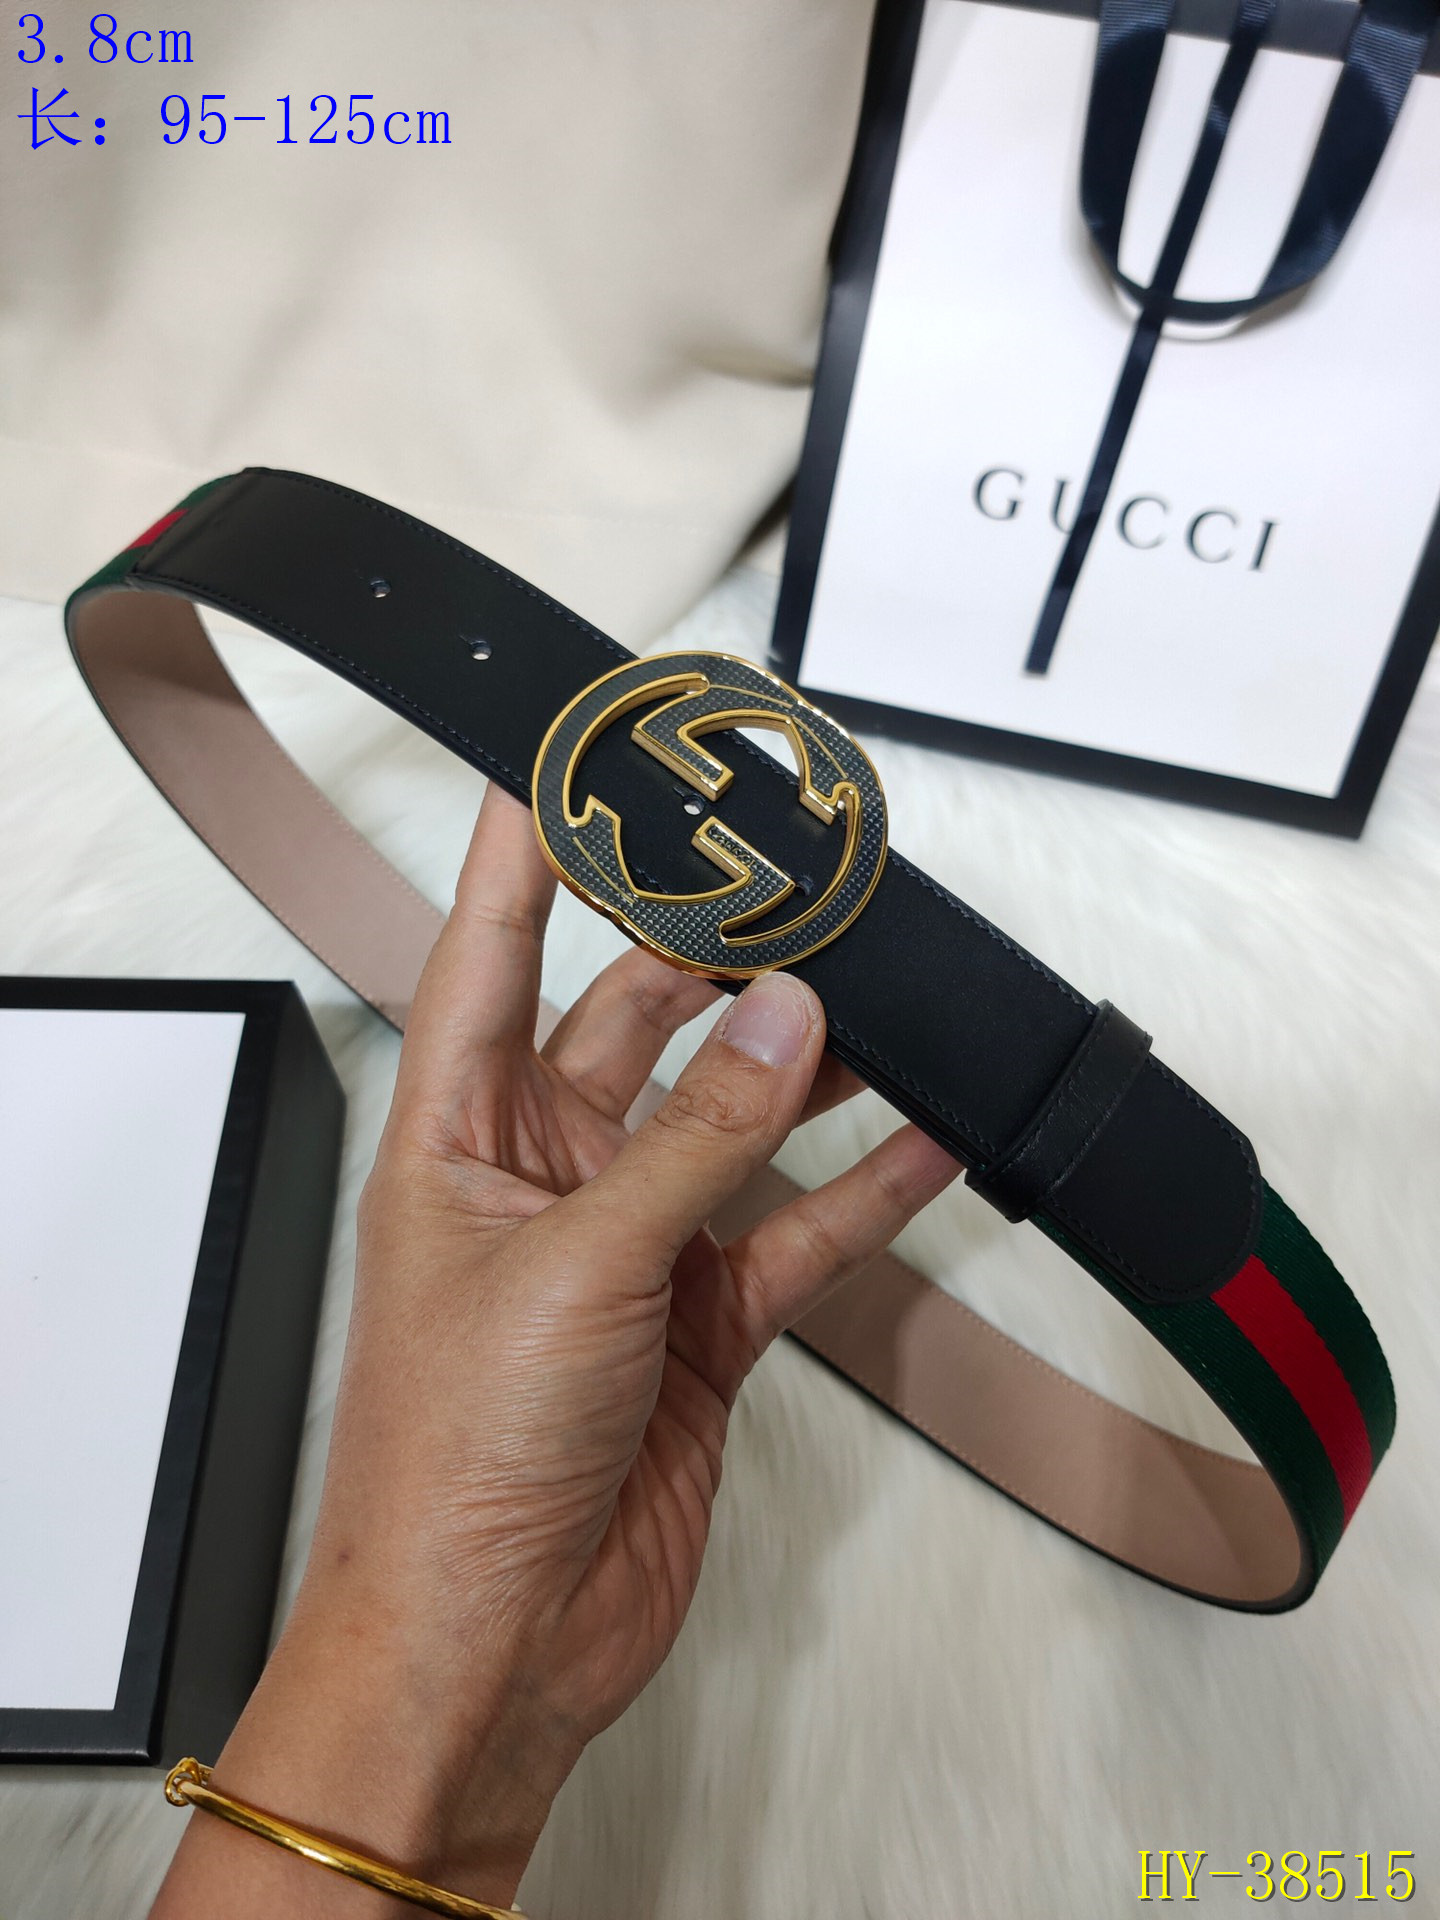 Cheap 2020 Cheap Gucci 3.8 cm Width Belts # 217709,$45 [FB217709 ...